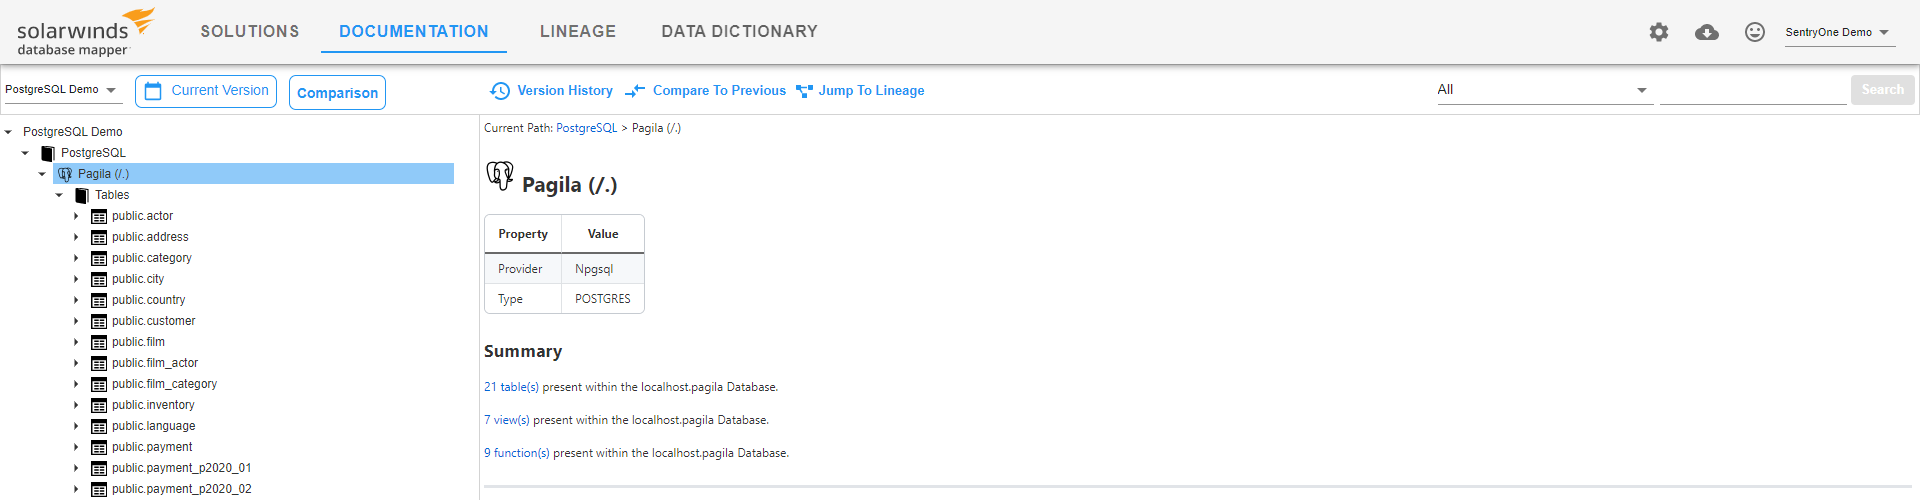 Database Mapper Documentation PostgreSQL database example